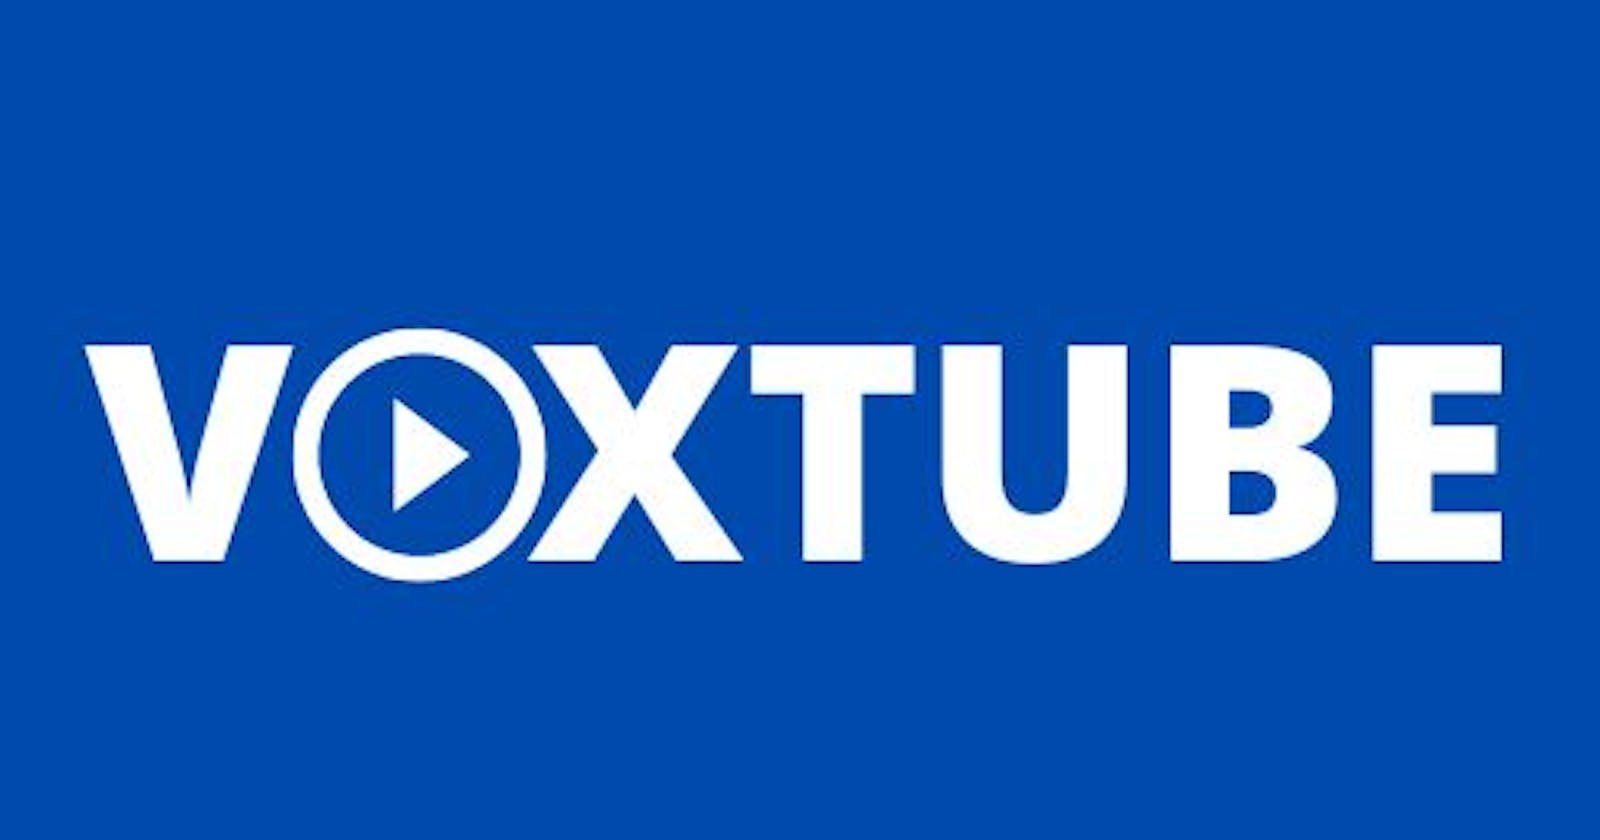 VoxTube: The video streaming platform.